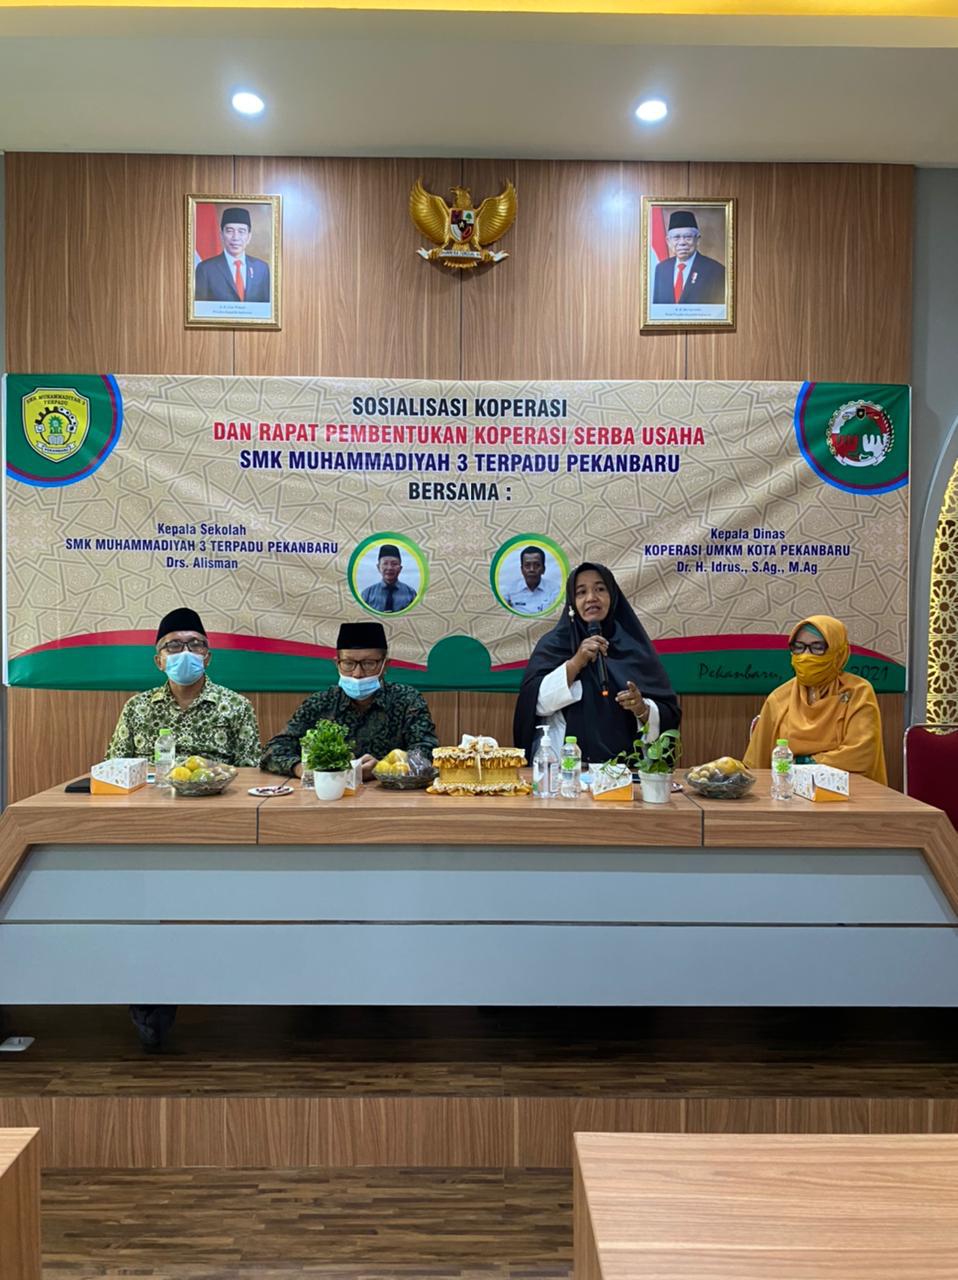 Diskop UKM Hadiri Sosialisasi dan Rapat Pembentukan Koperasi SMK Muhammadiyah 3 Terpadu